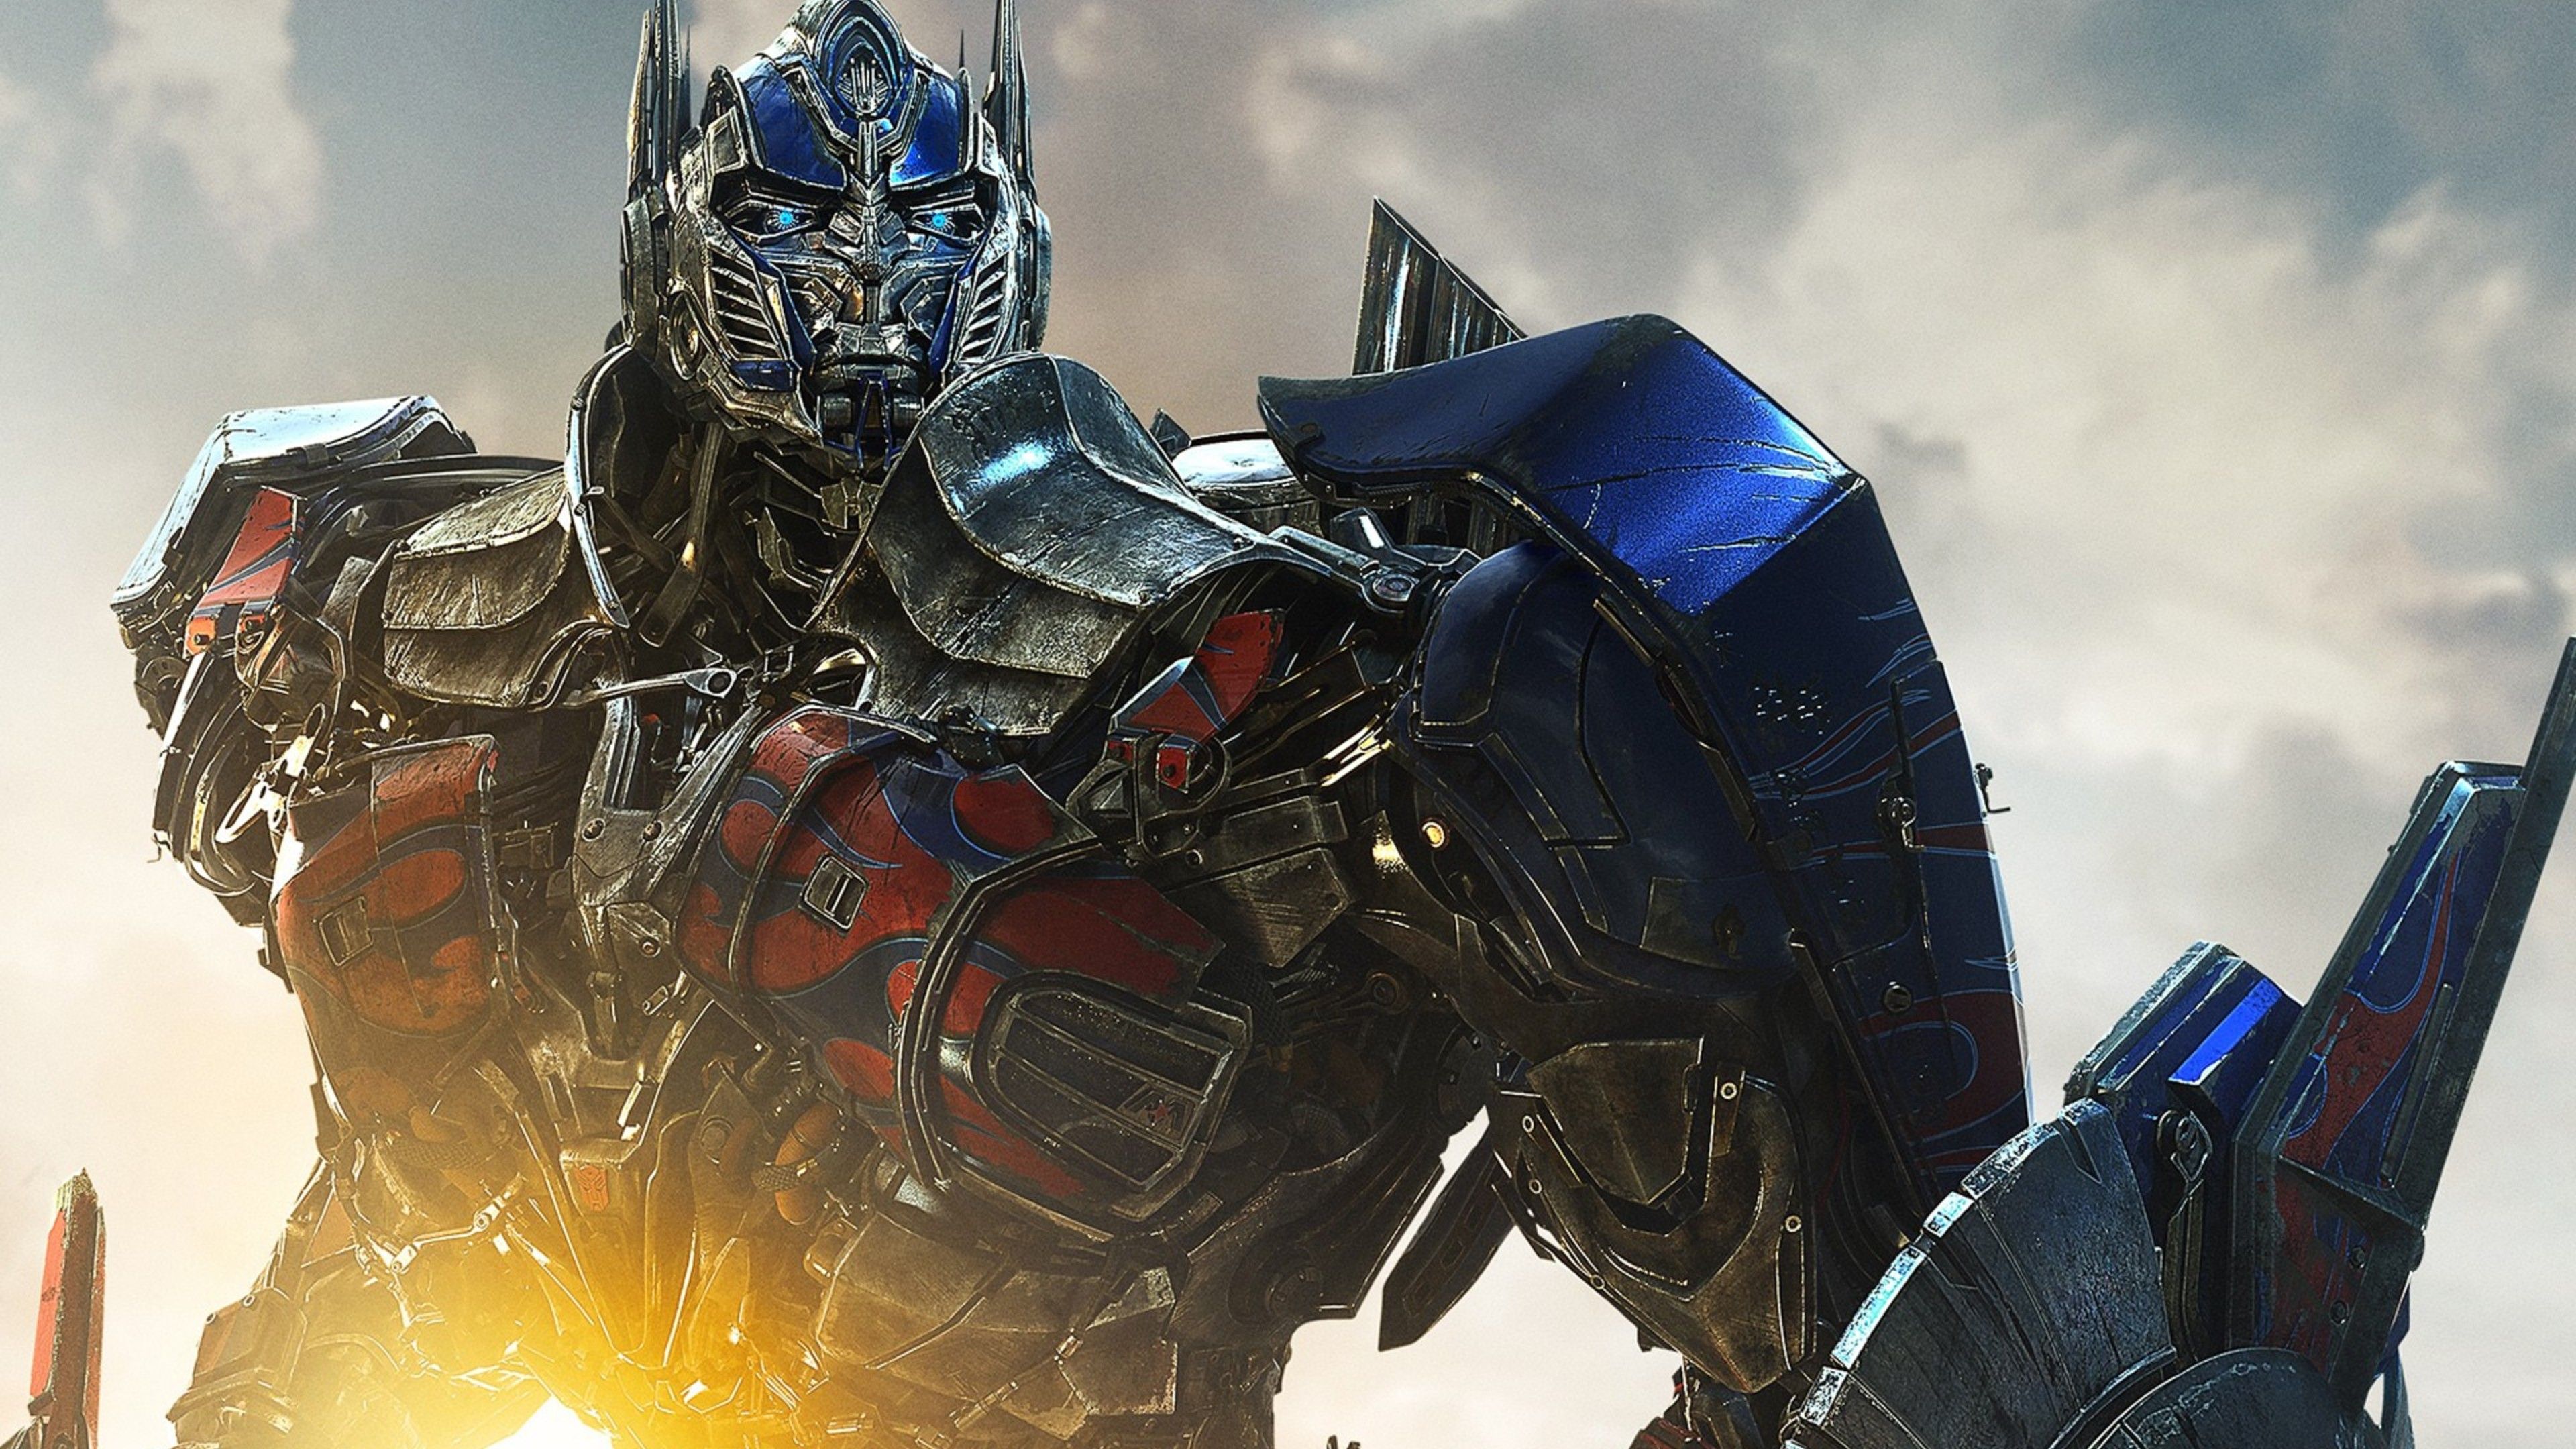 Optimus Prime From Transformers 4K wallpaper download